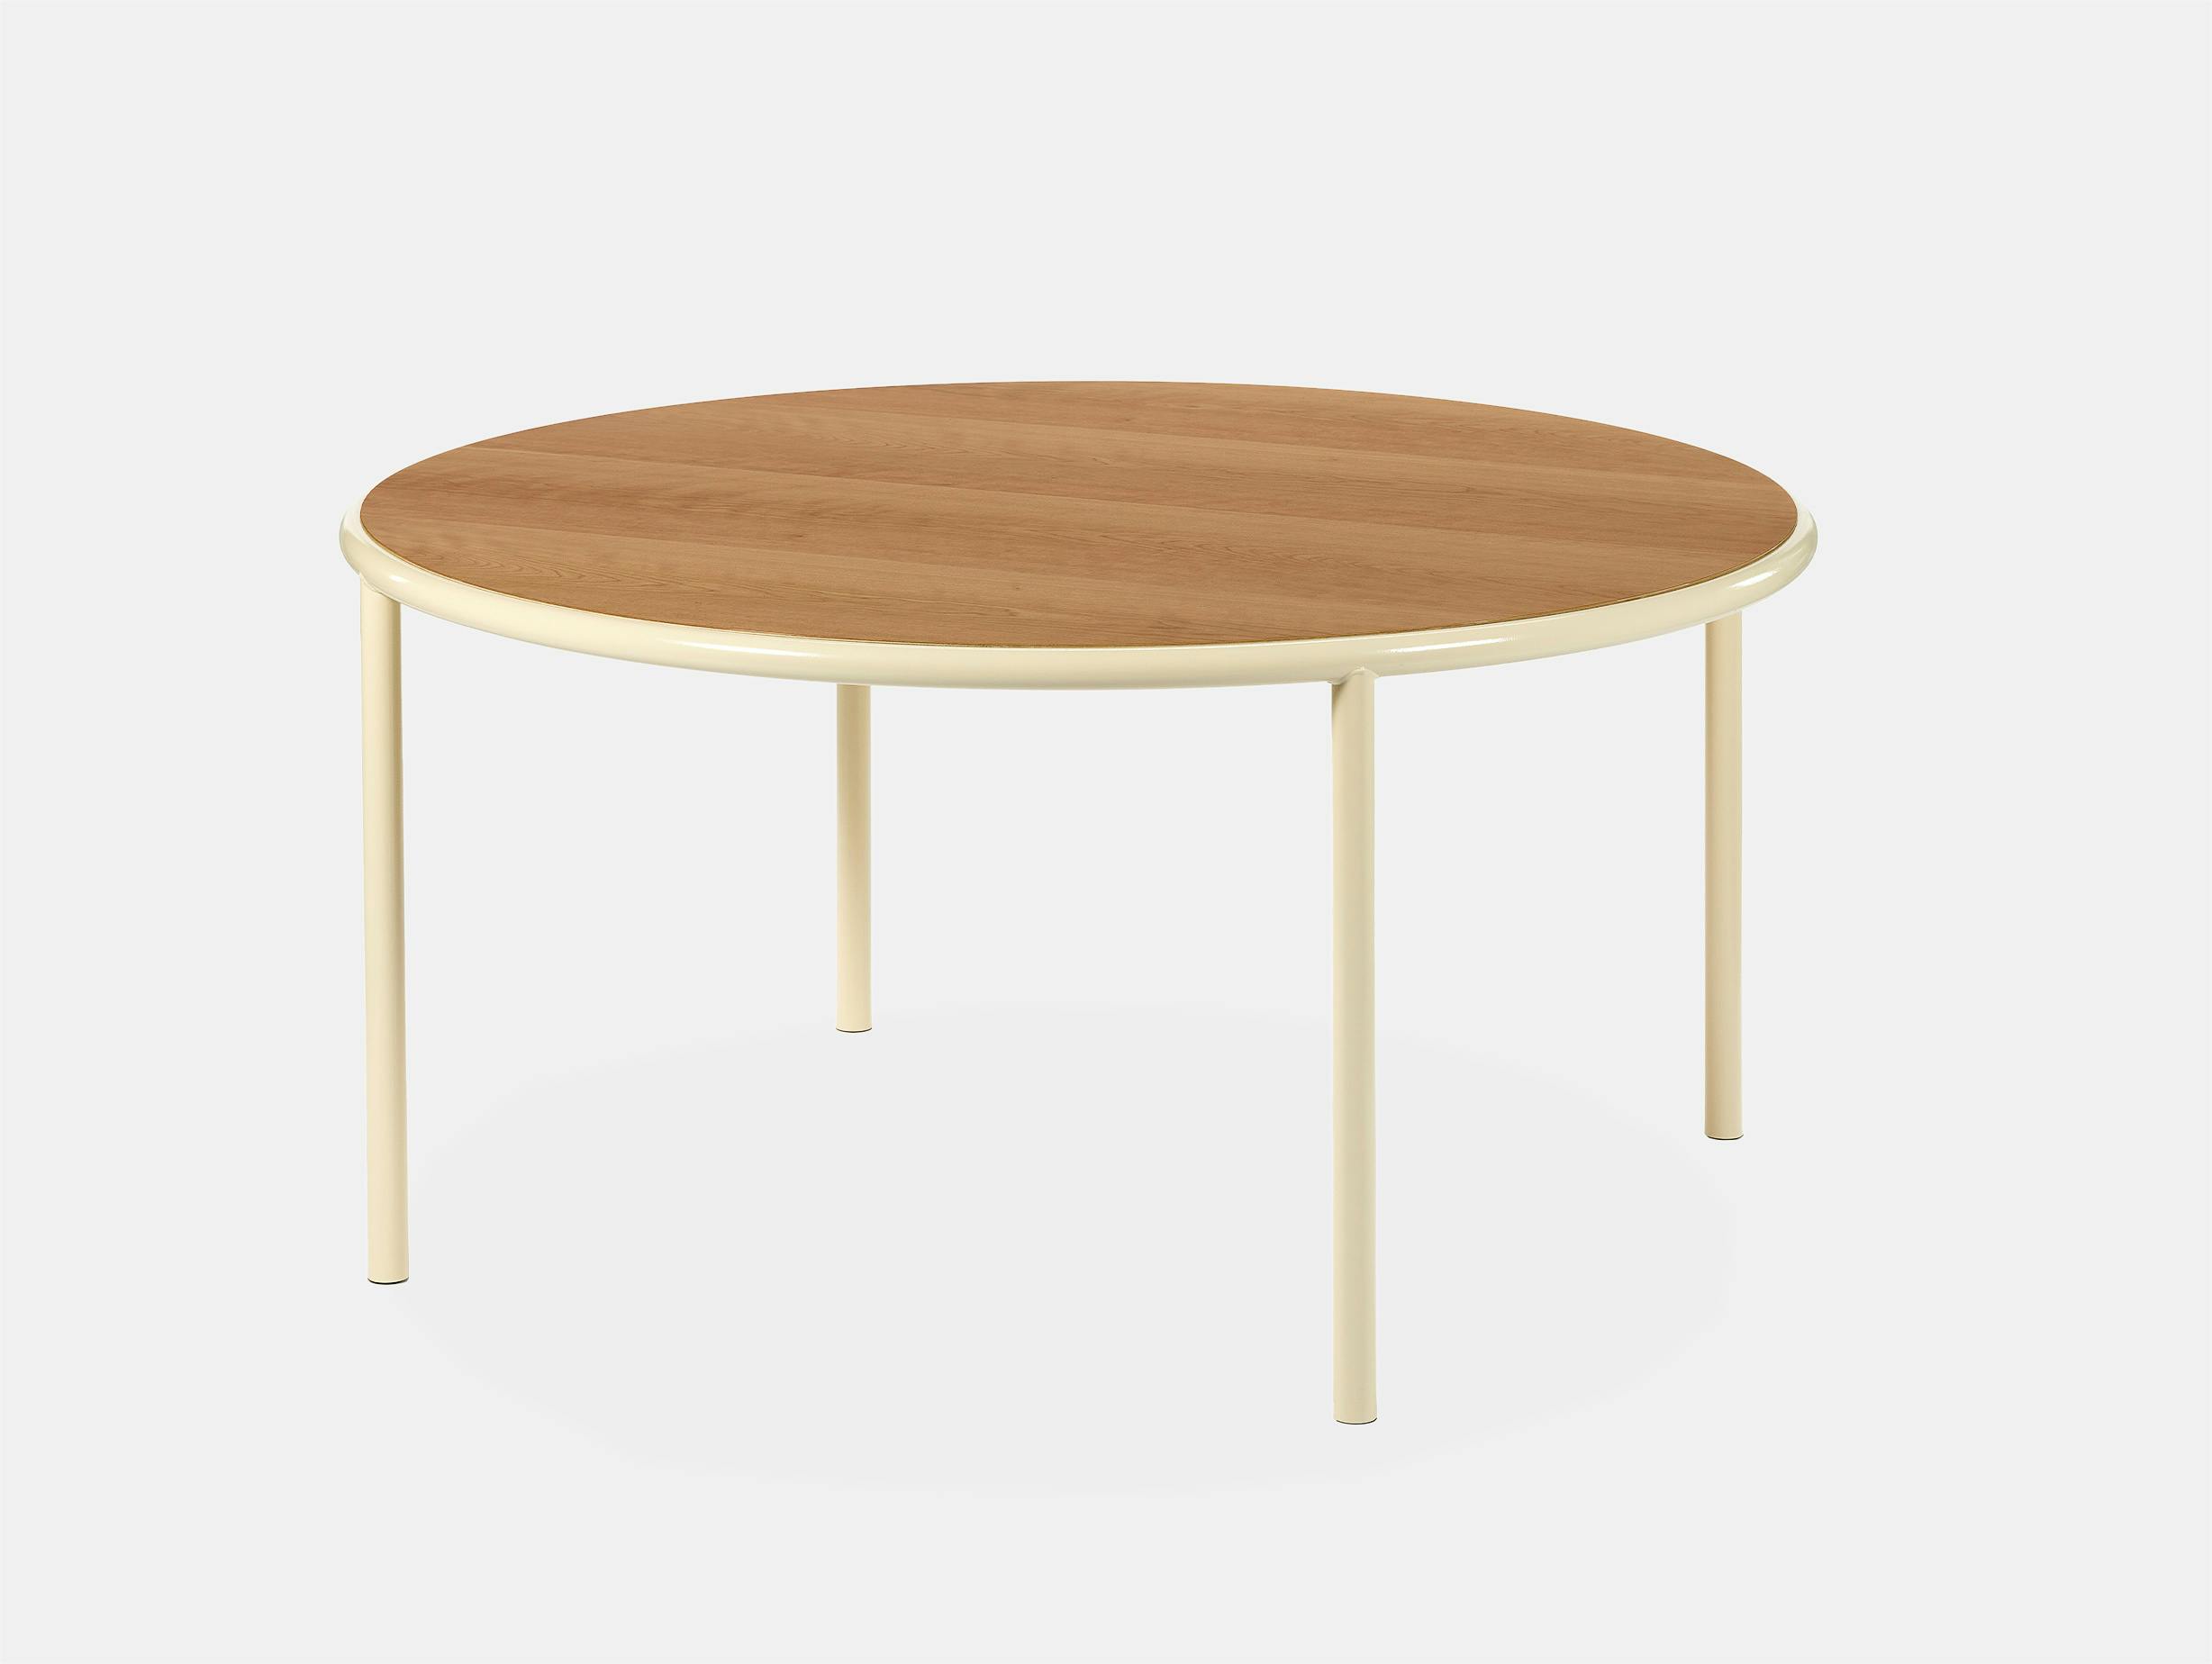 Muller van severen wooden table large round ivory cherry